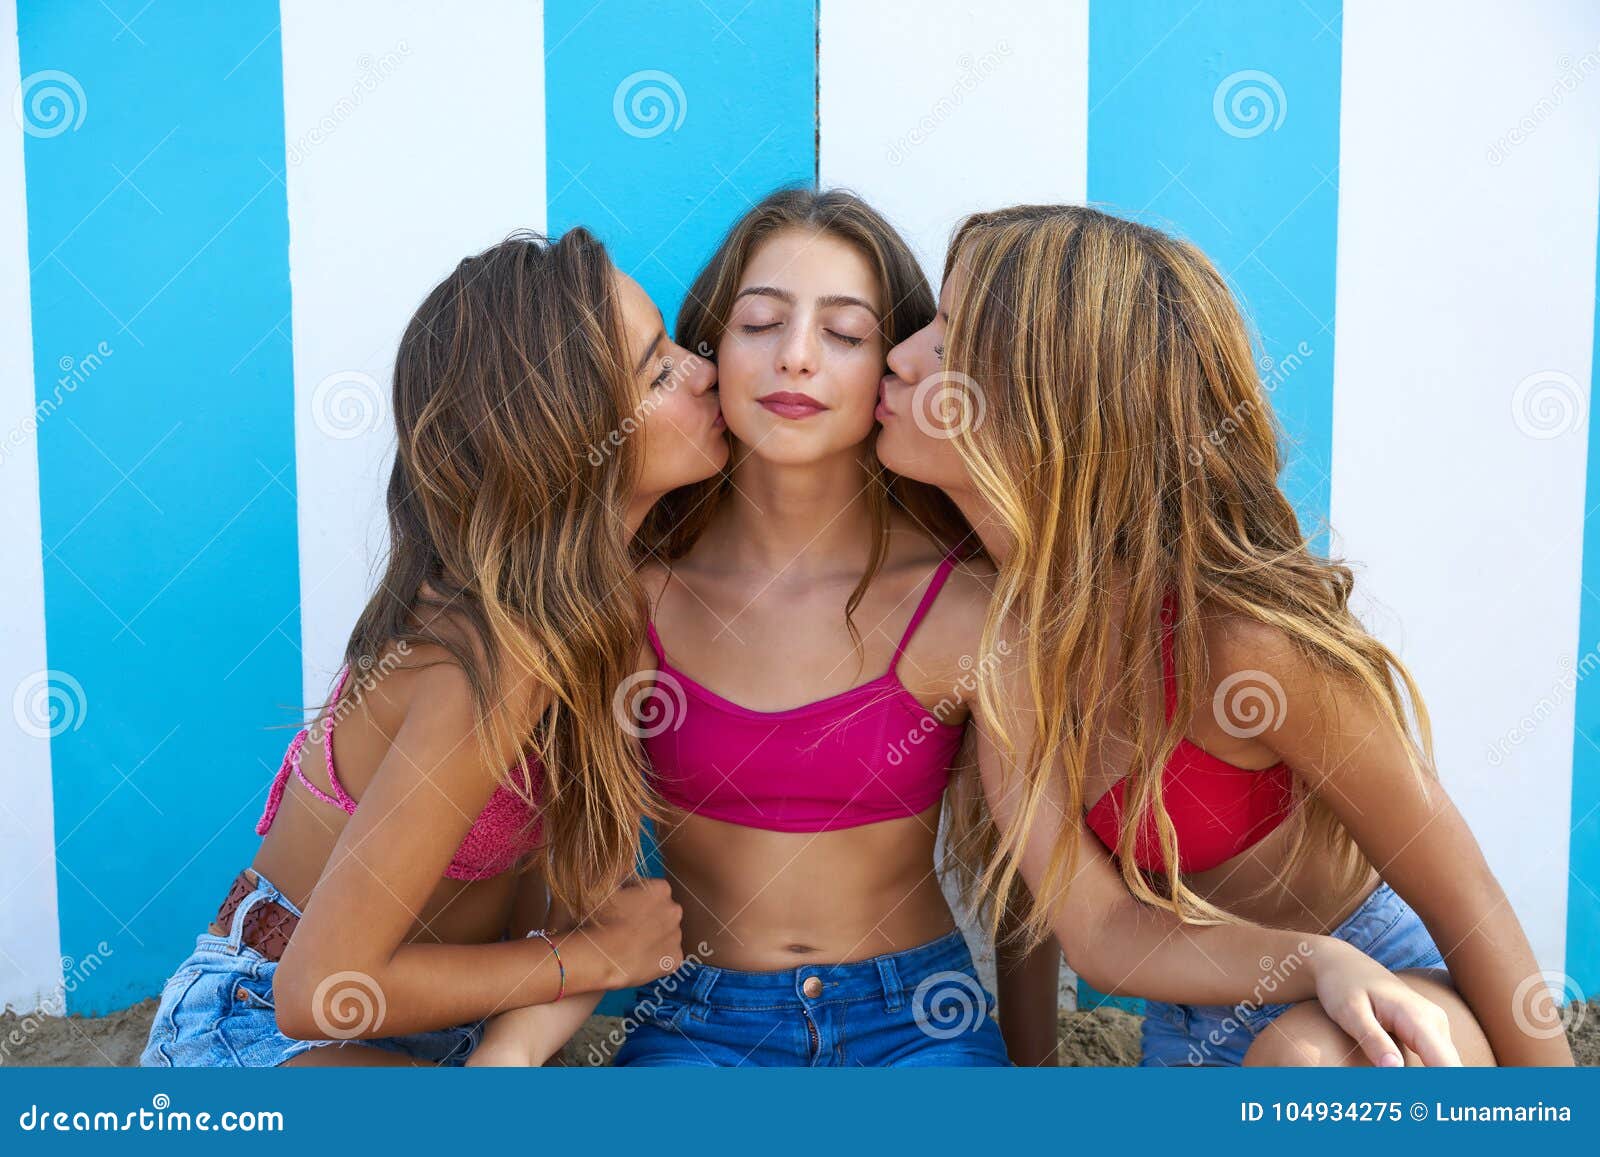 self shot girls kissing